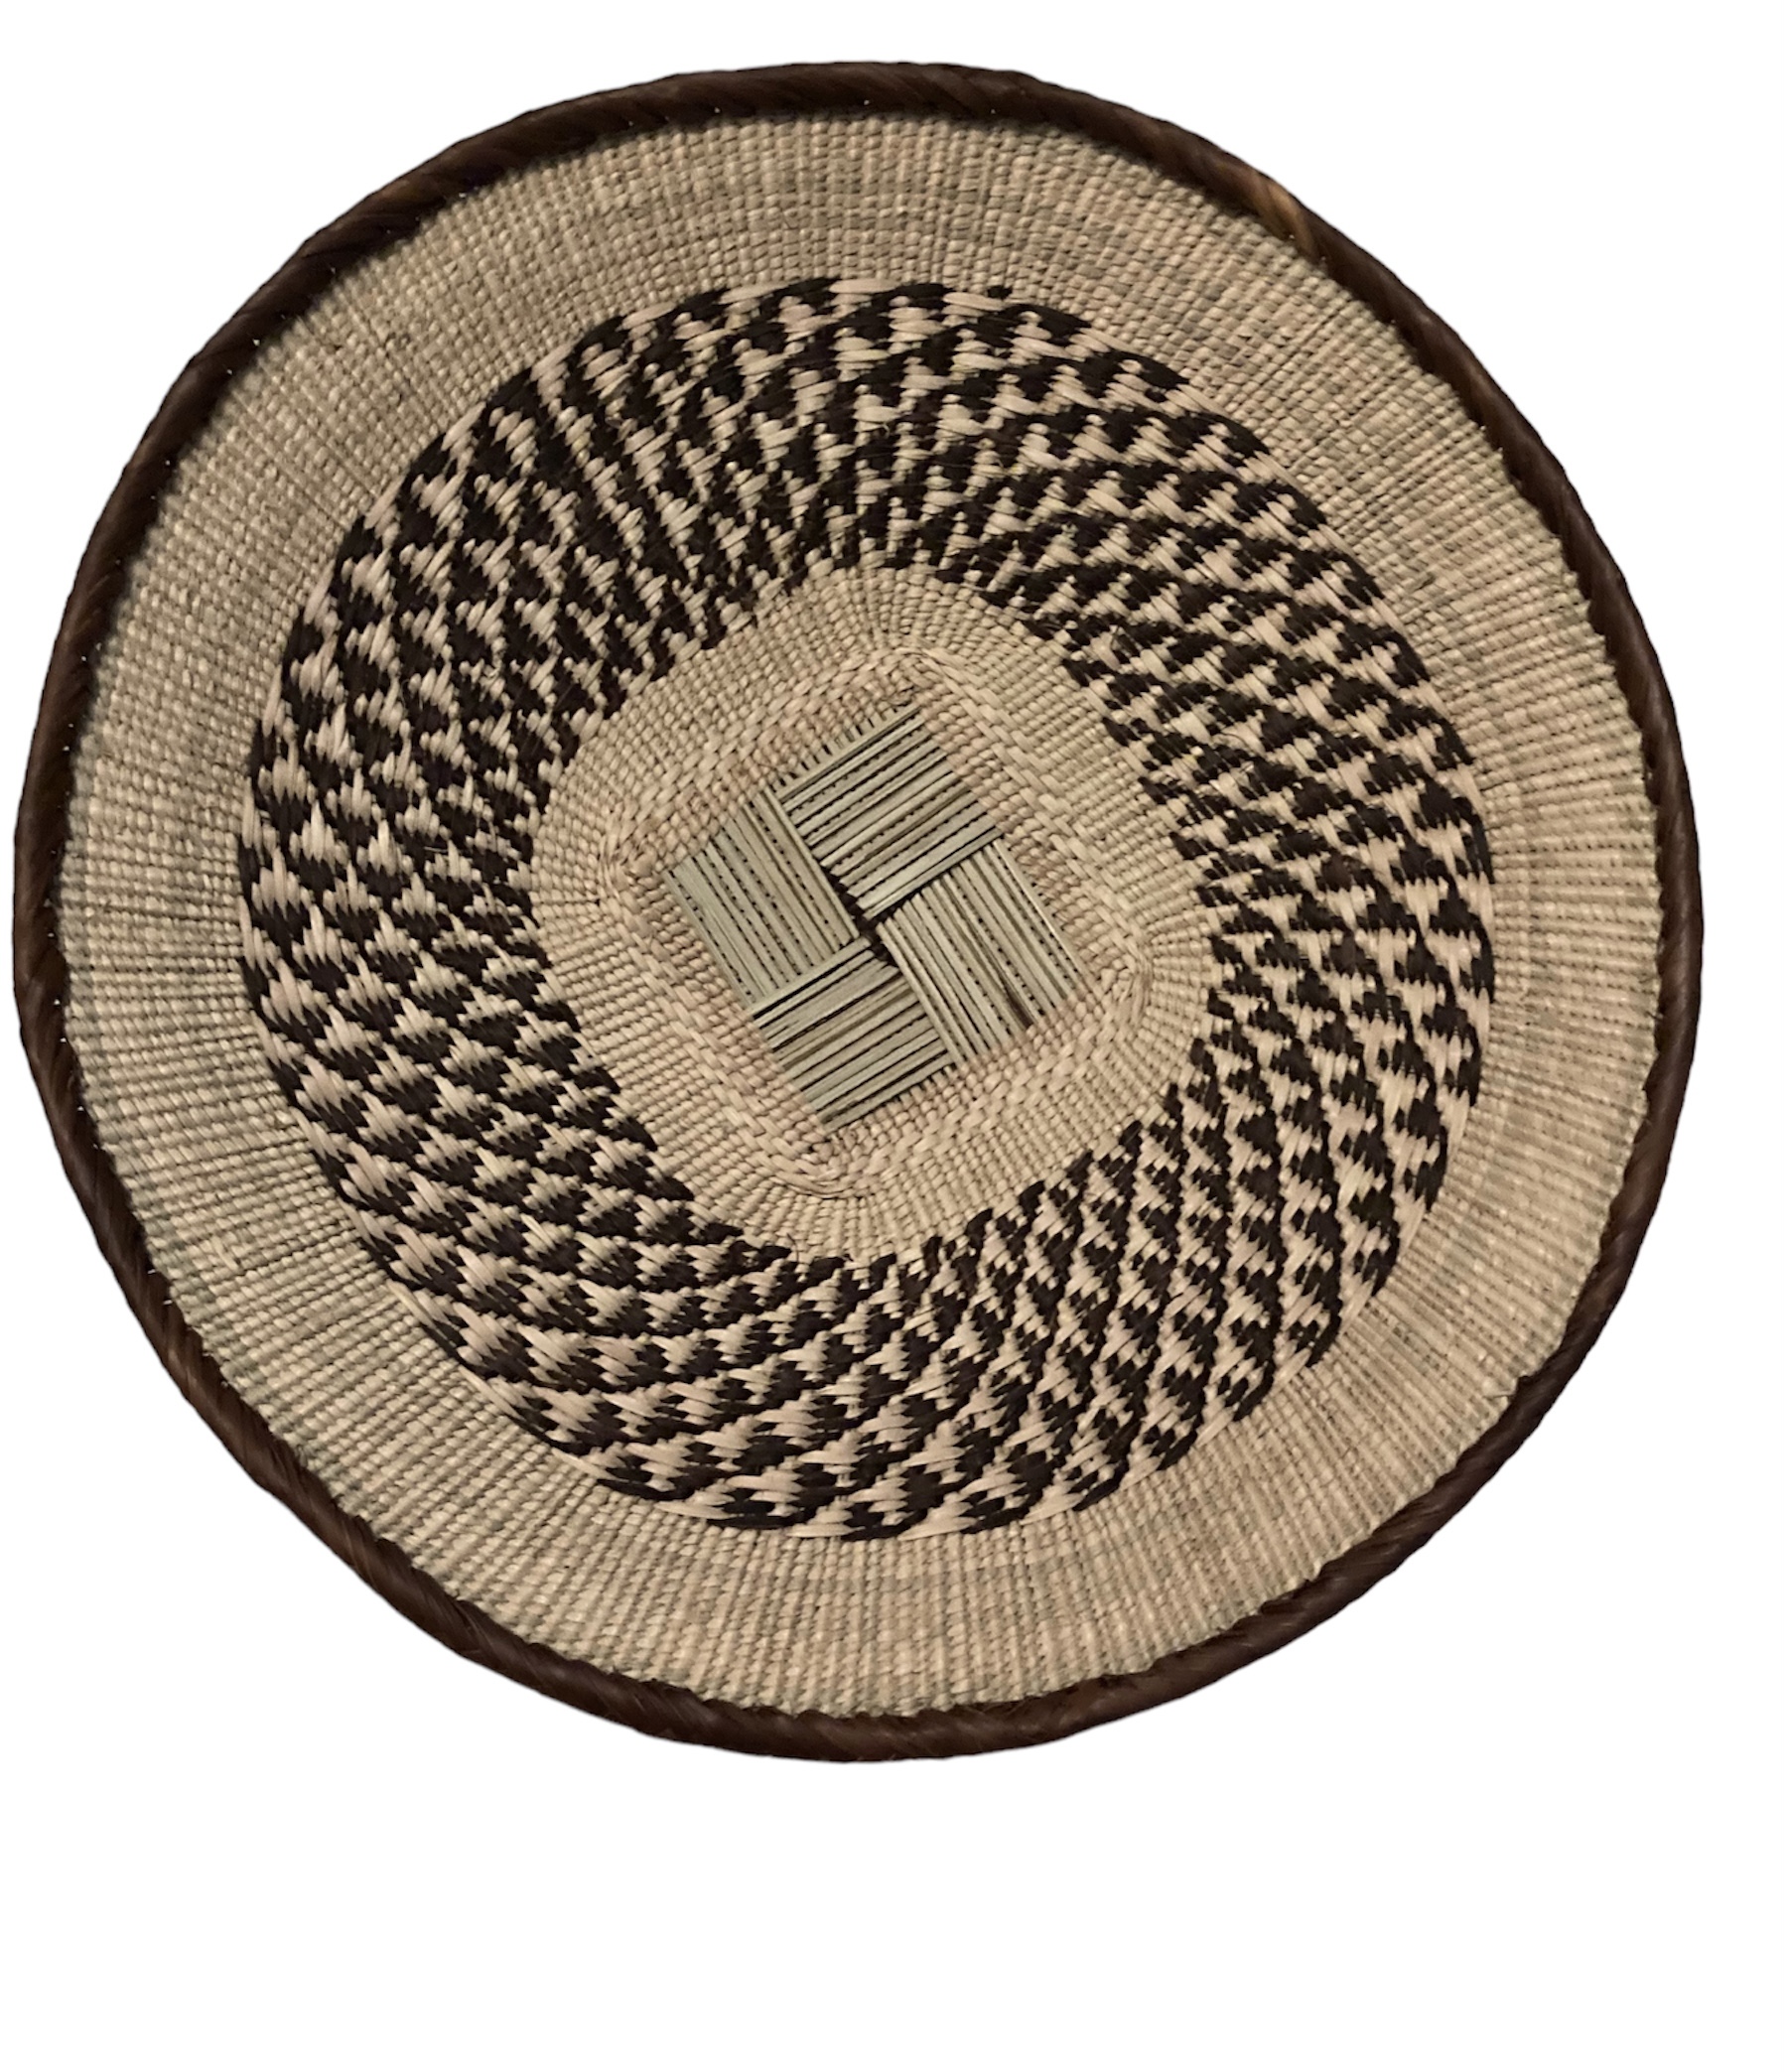 Tonga Basket from Zimbabwe - Design #027 - 15" dia.